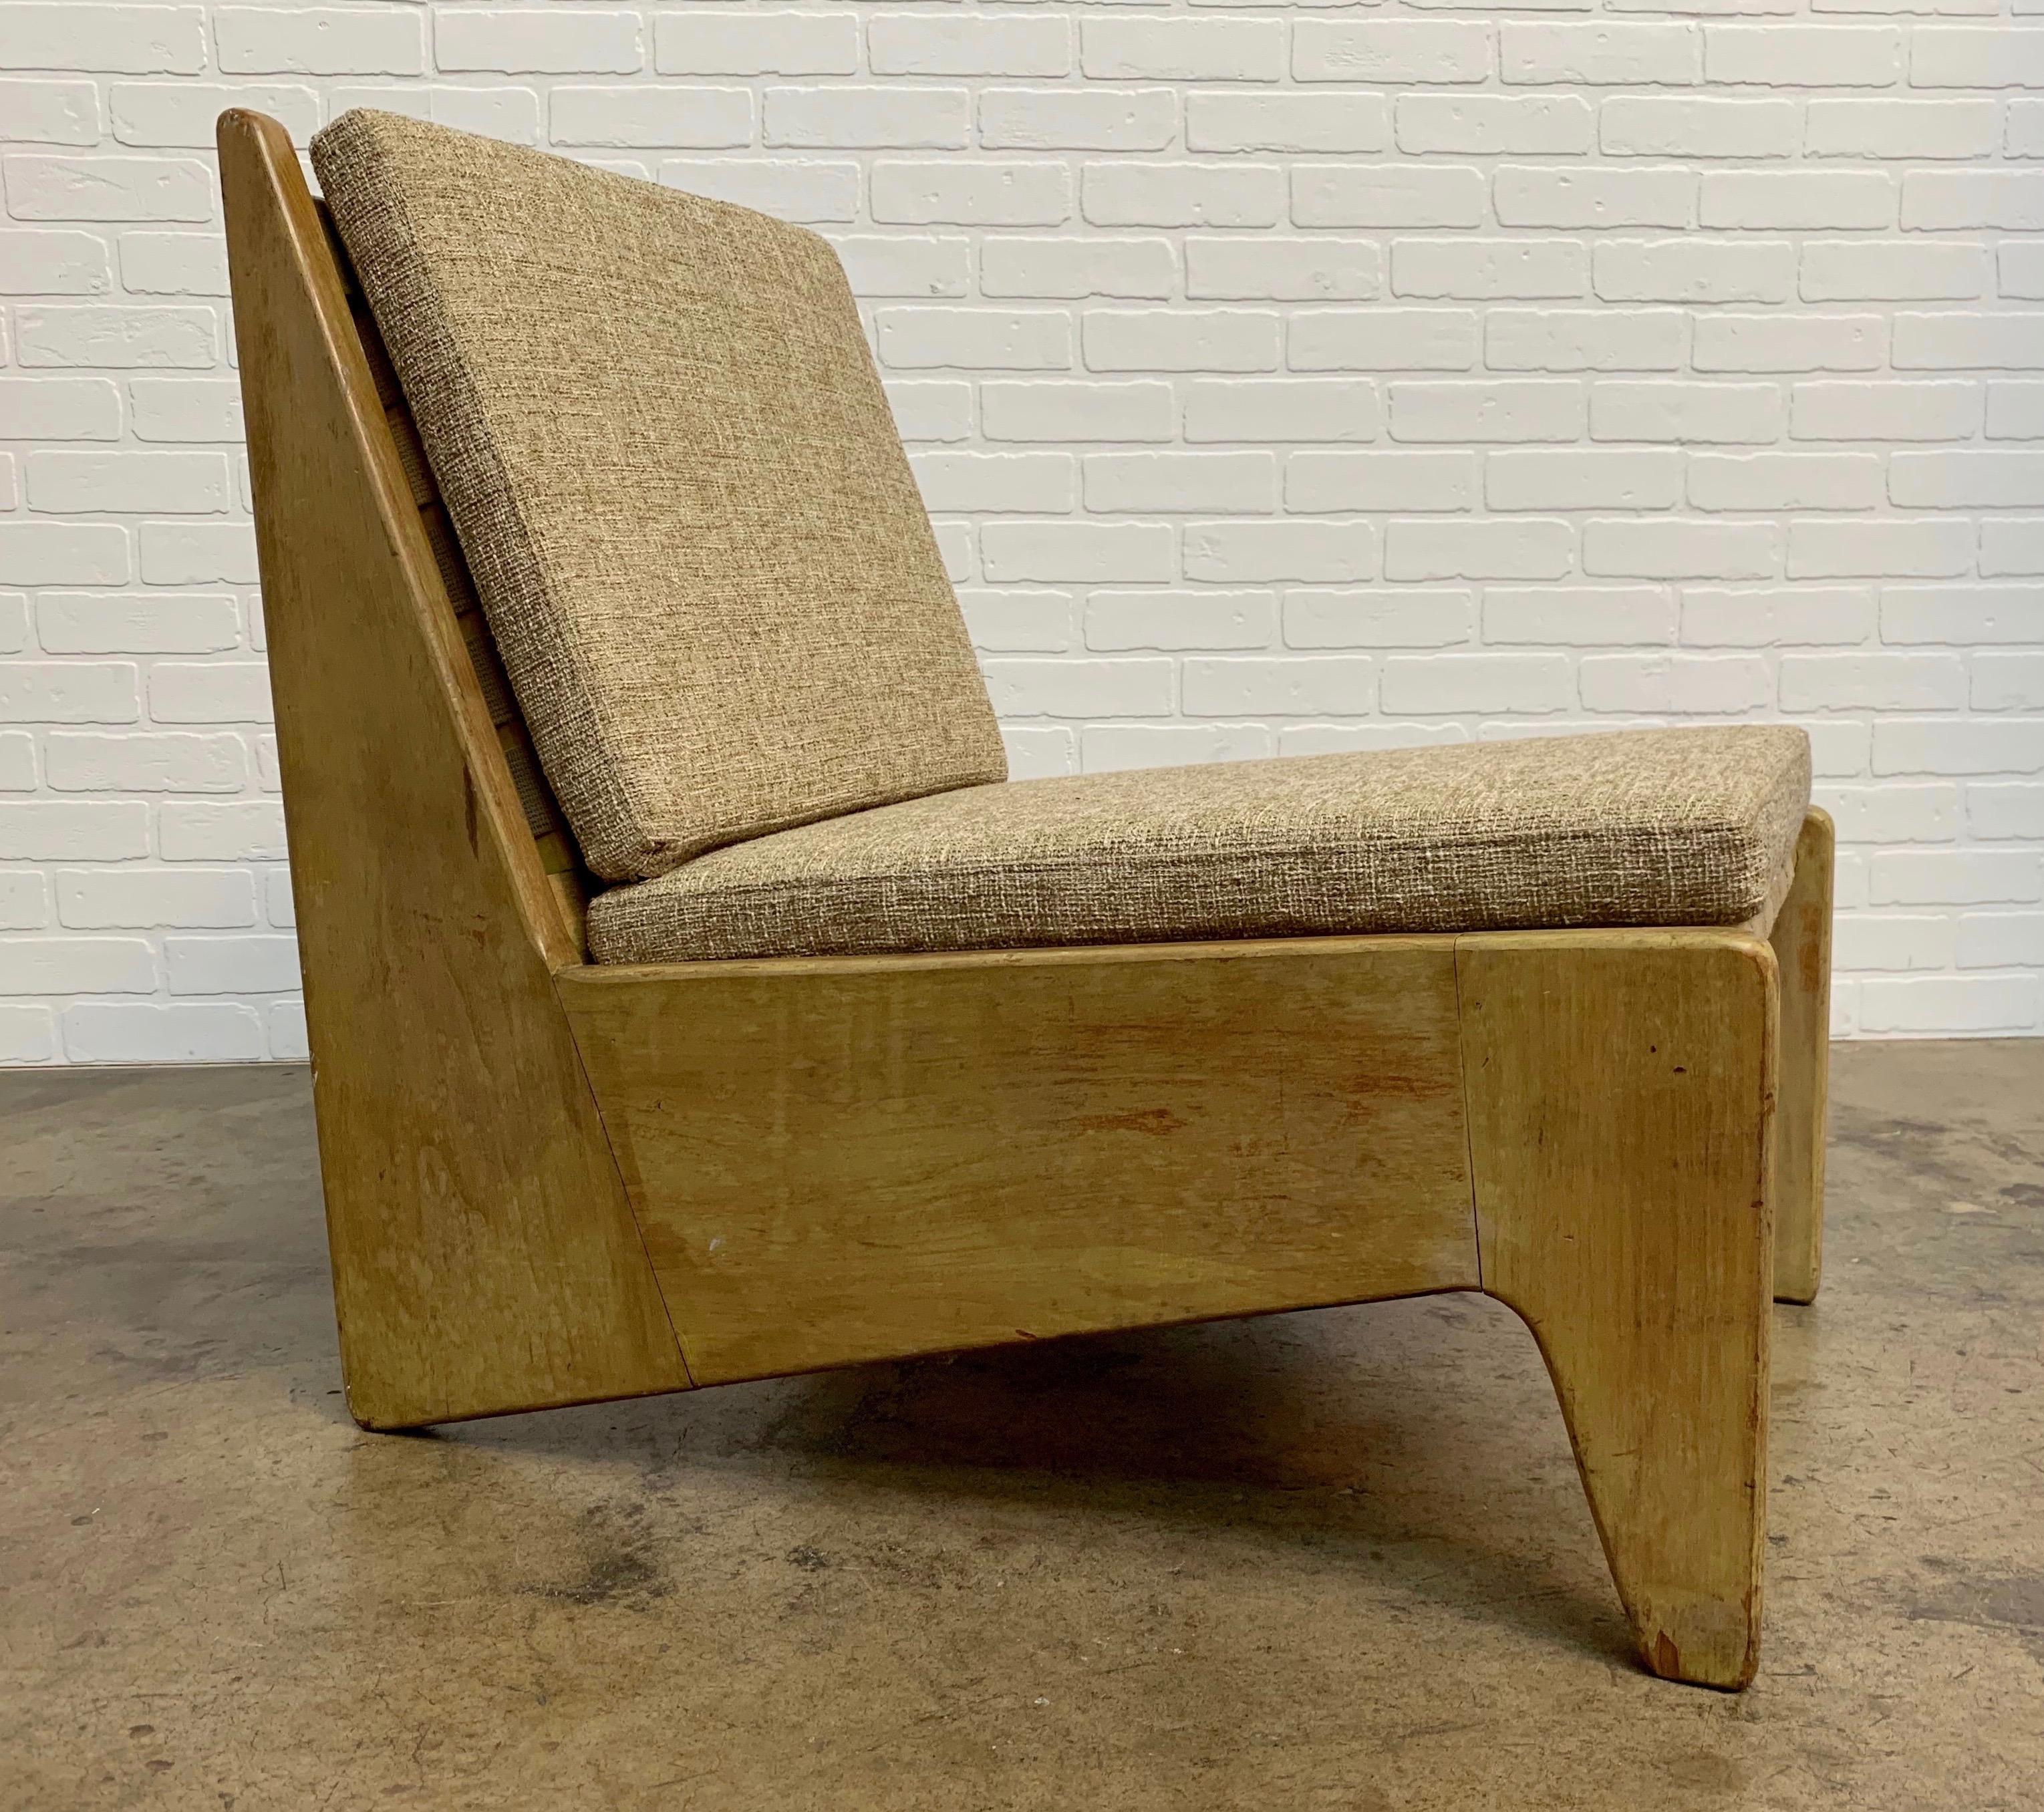 Architectural modernist slipper lounge chair by Craftsman's Village.